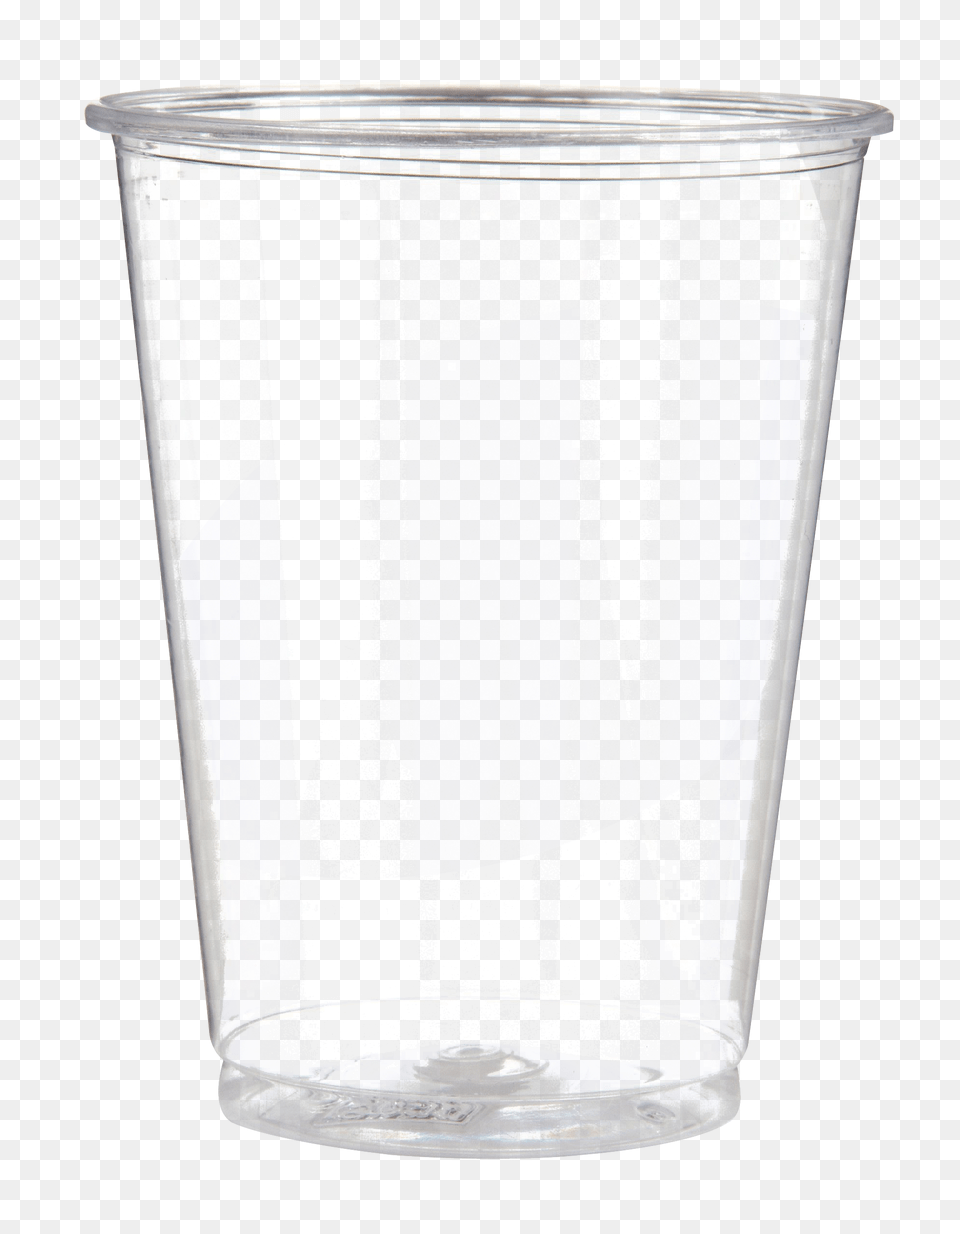 Pngpix Com Plastic Cup Transparent Image, Jar, Glass, Bottle, Shaker Png